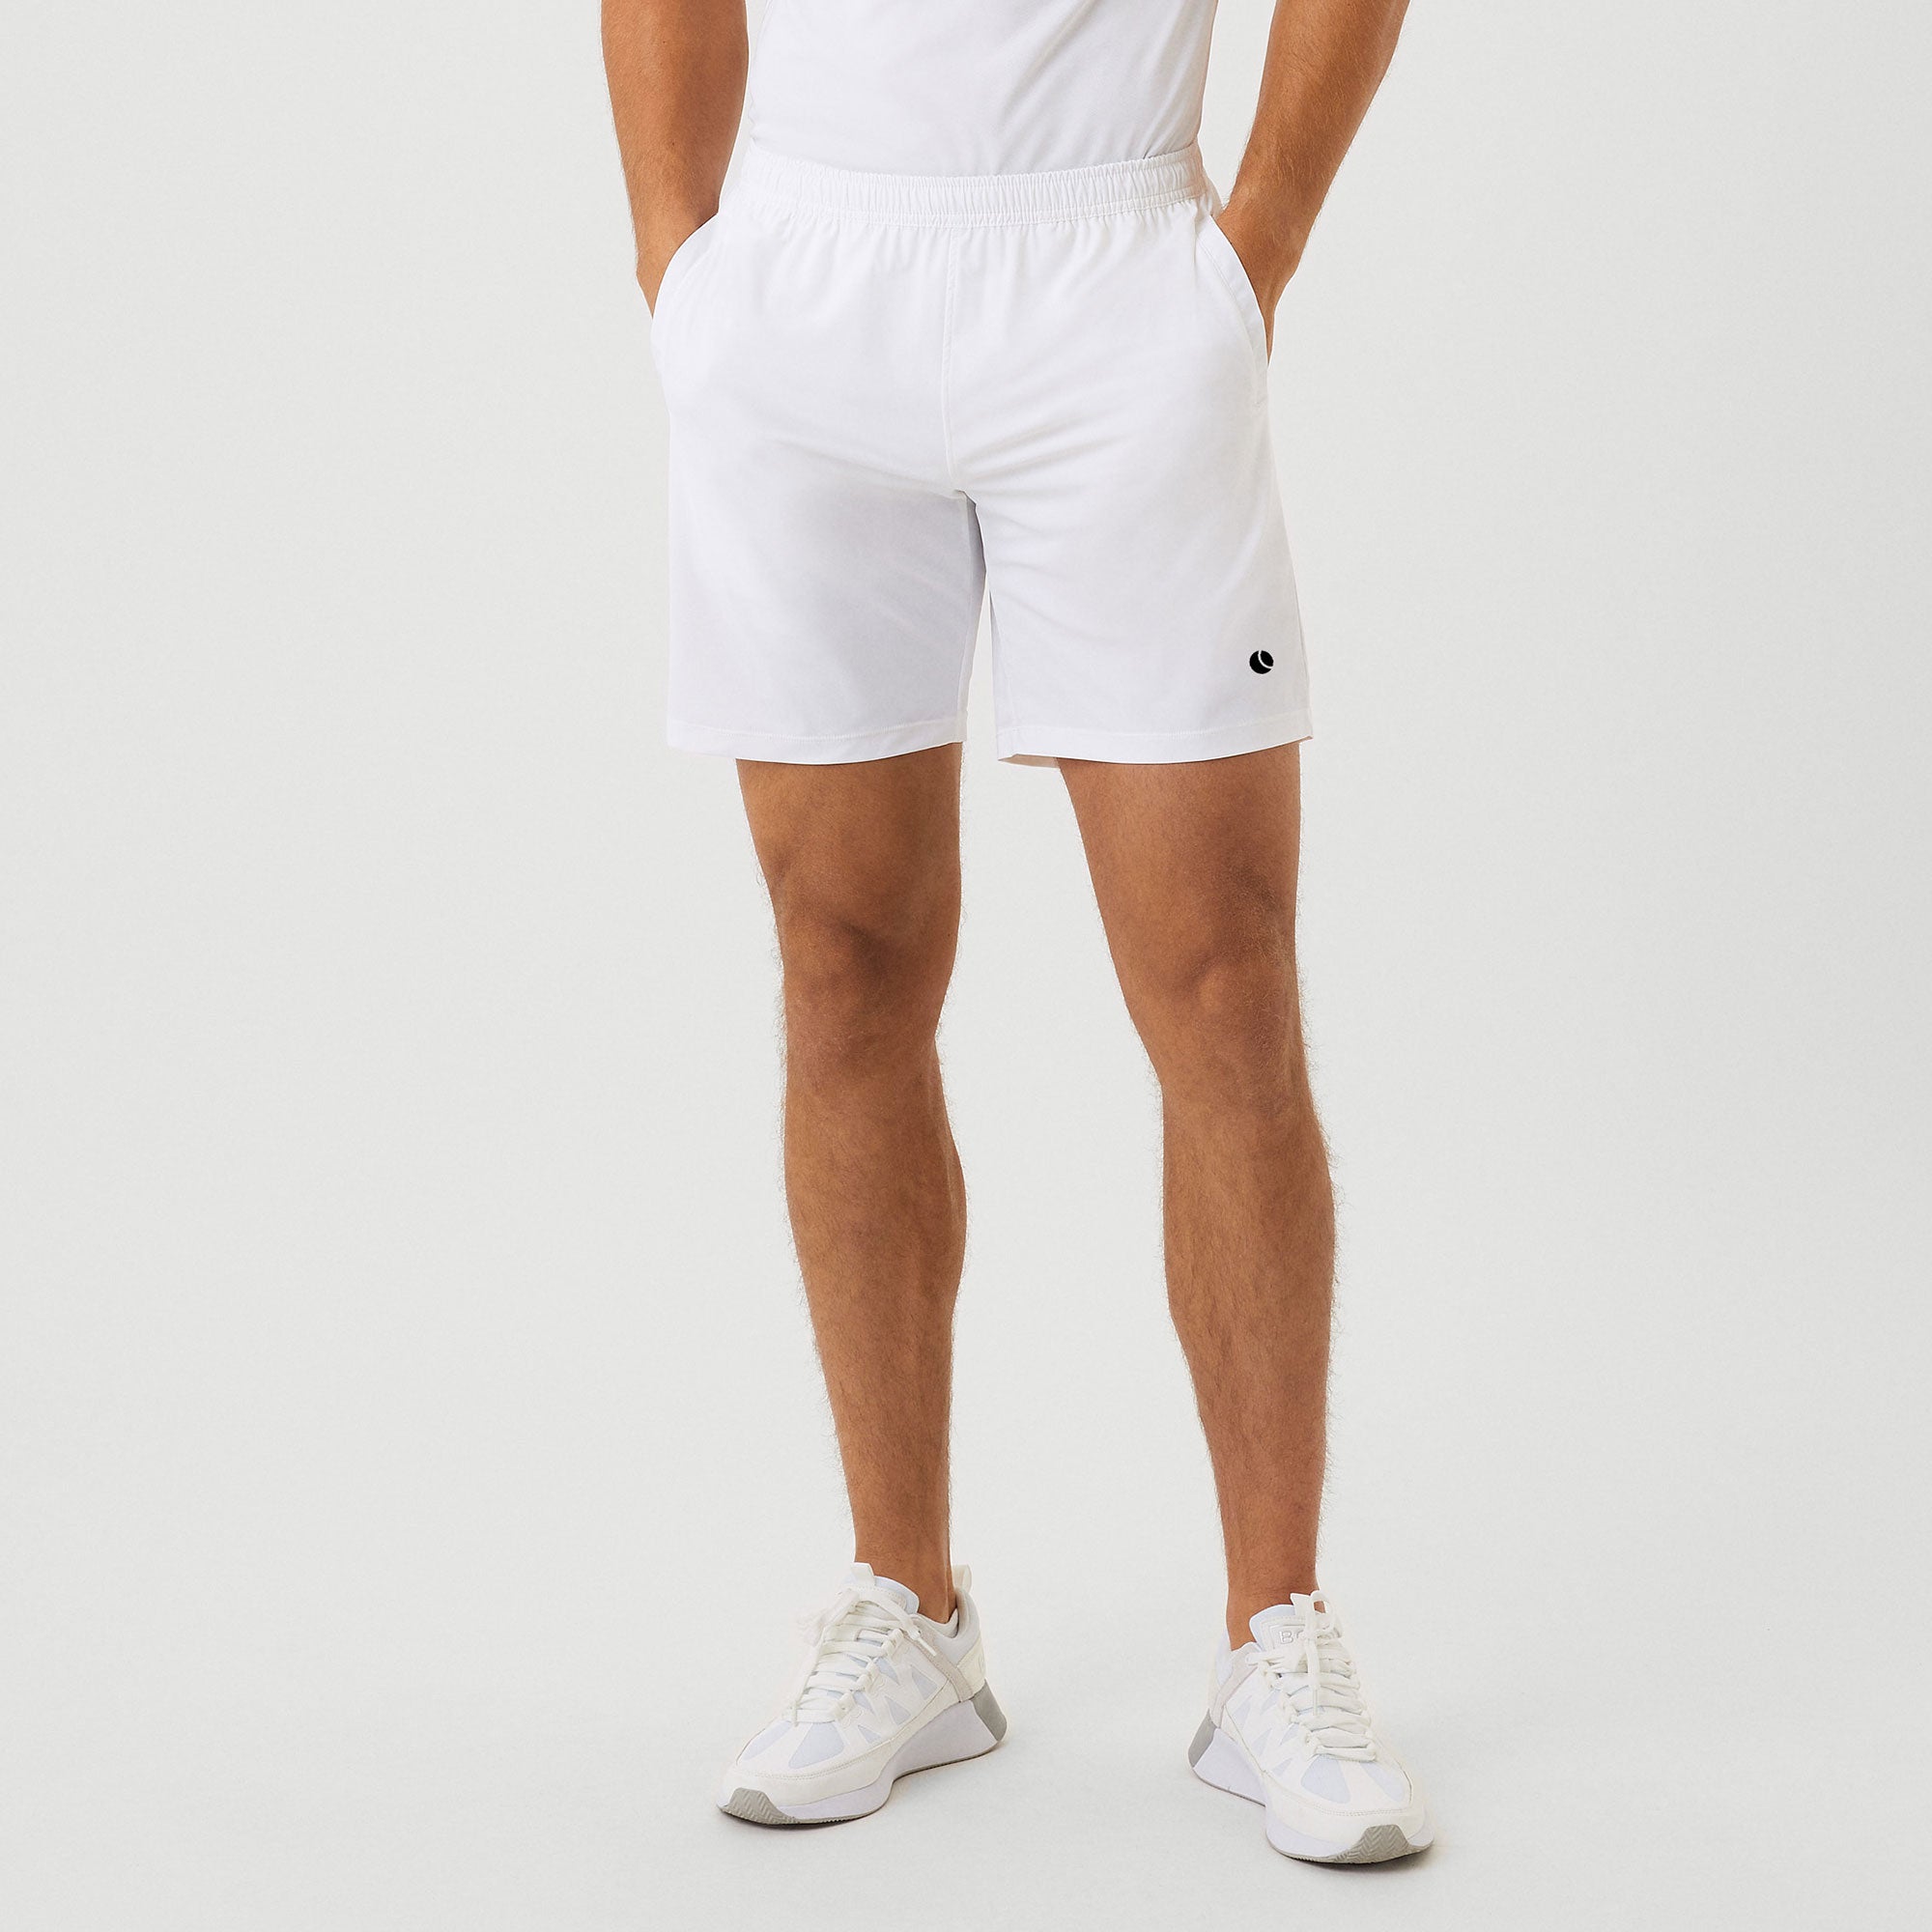 Björn Borg Ace Men's 9-Inch Tennis Shorts - White (1)